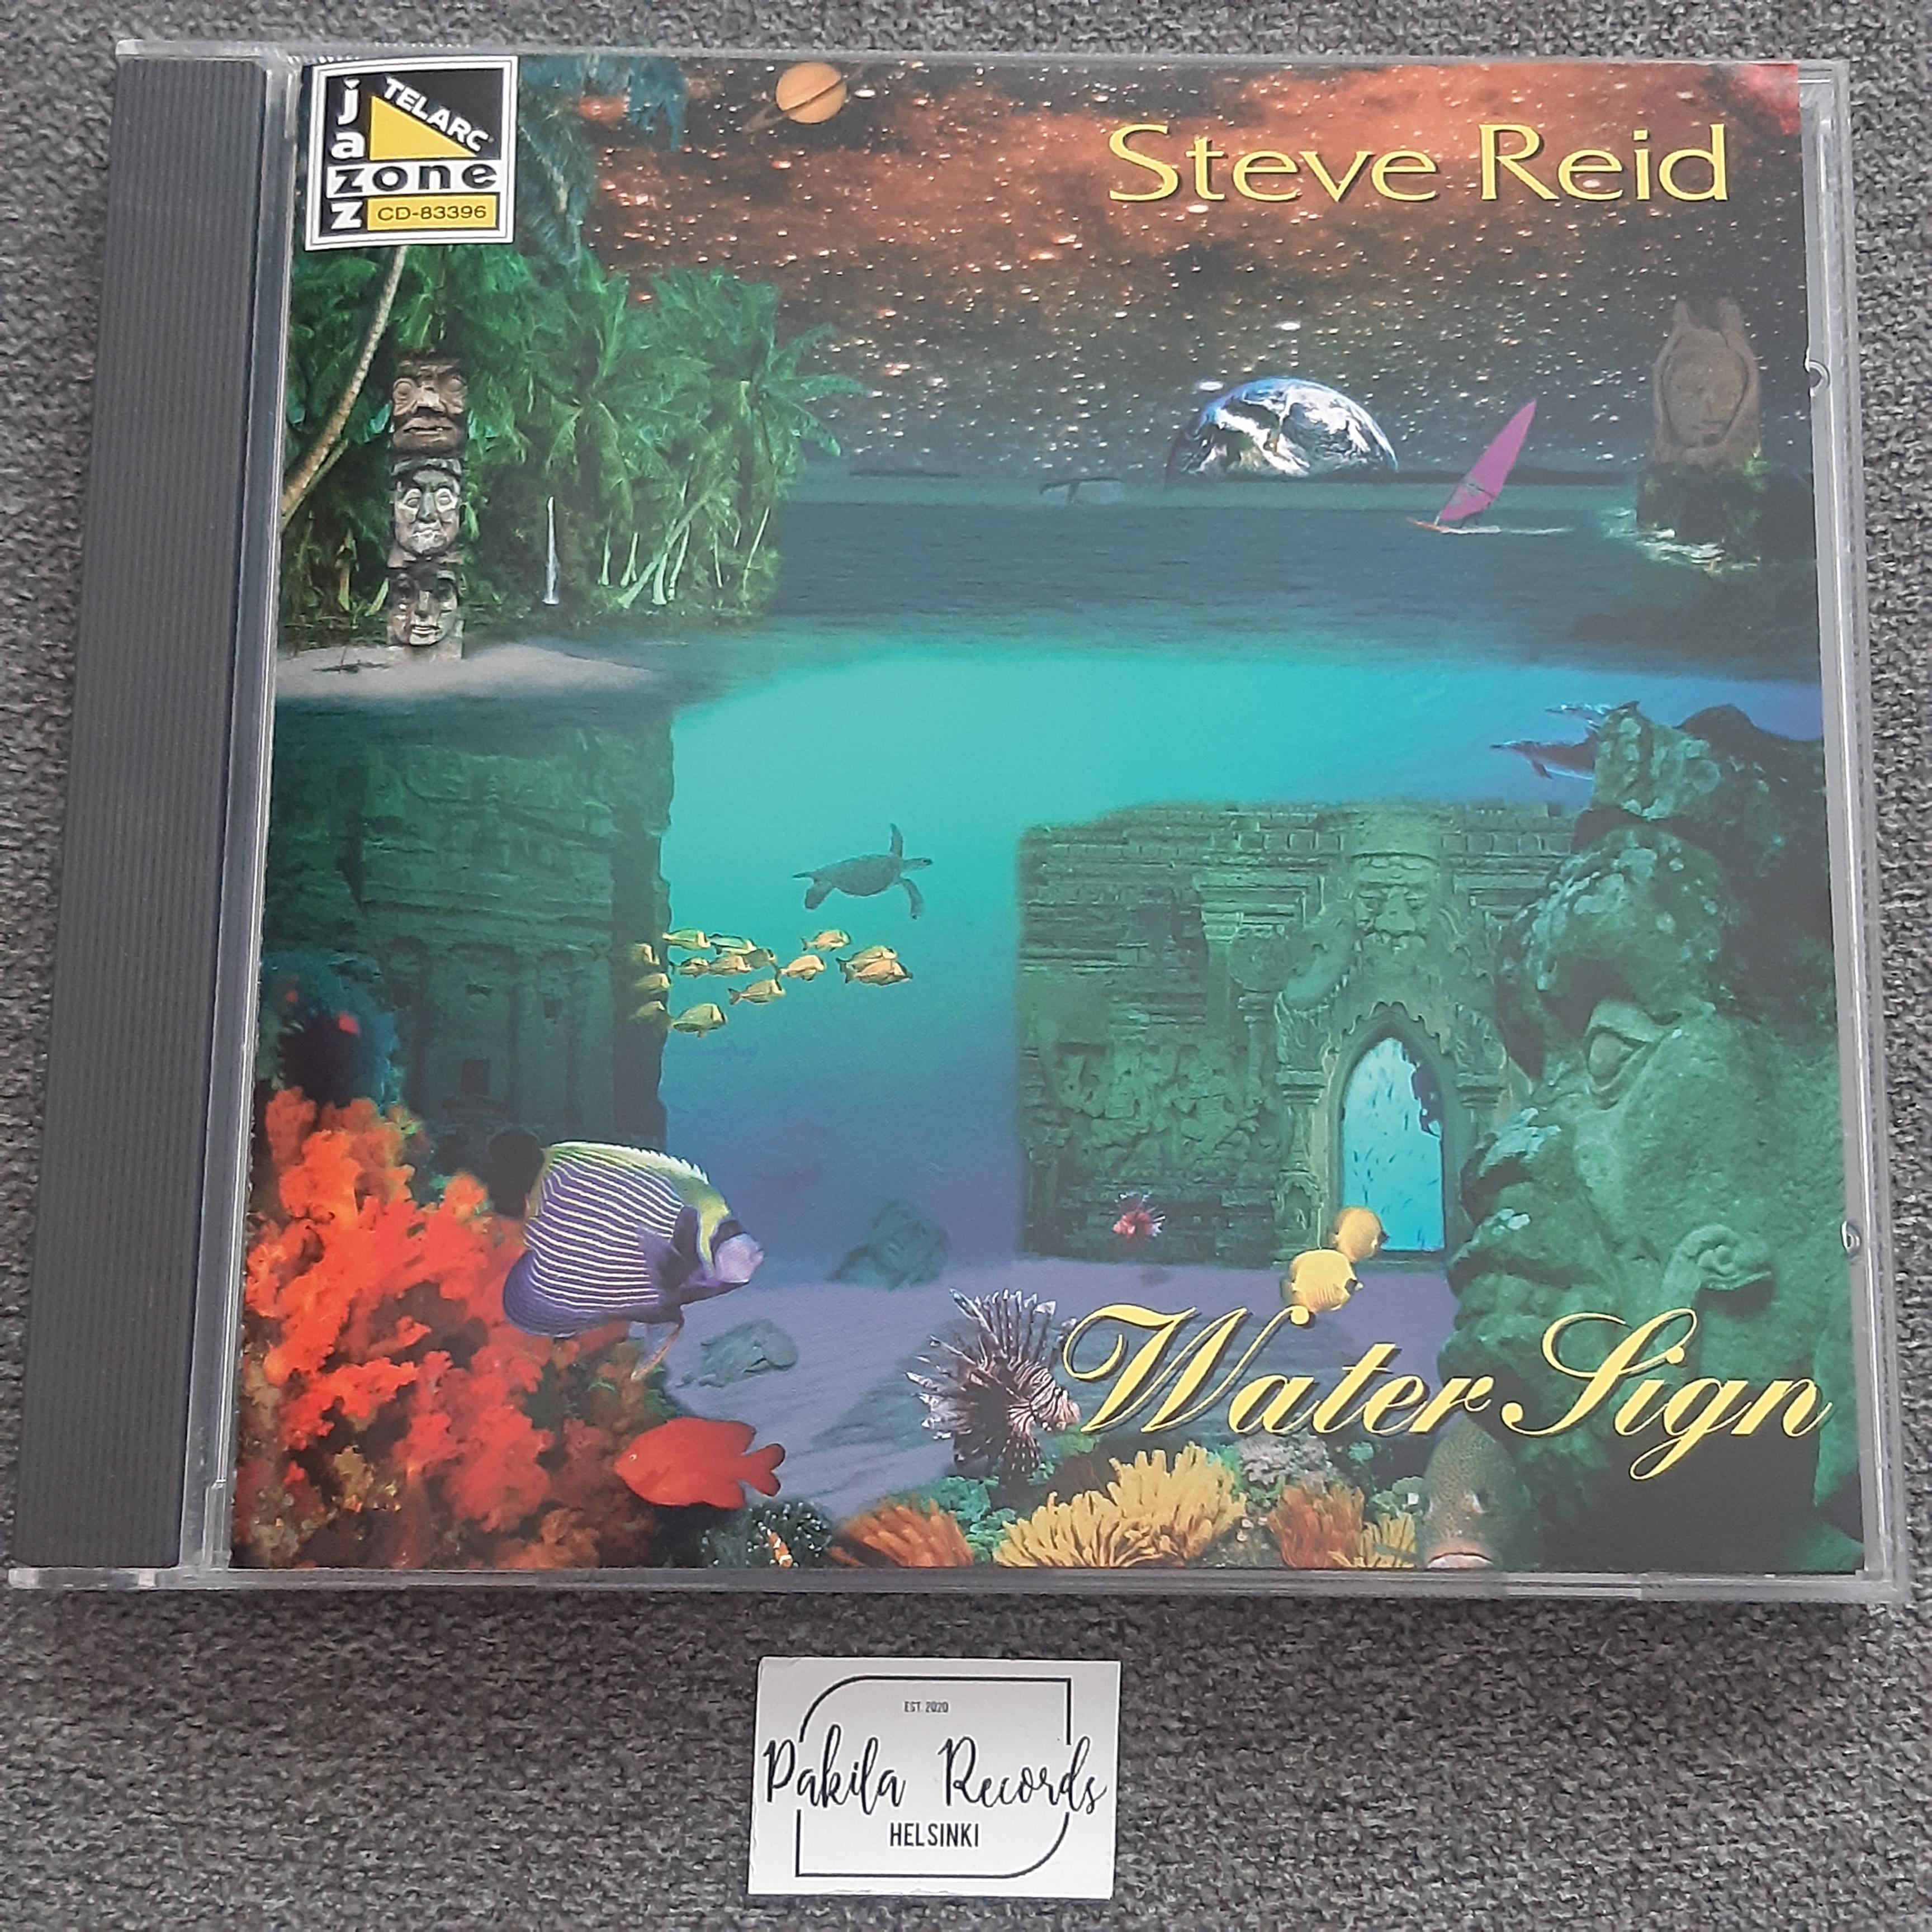 Steve Reid - Water Sign - CD (käytetty)